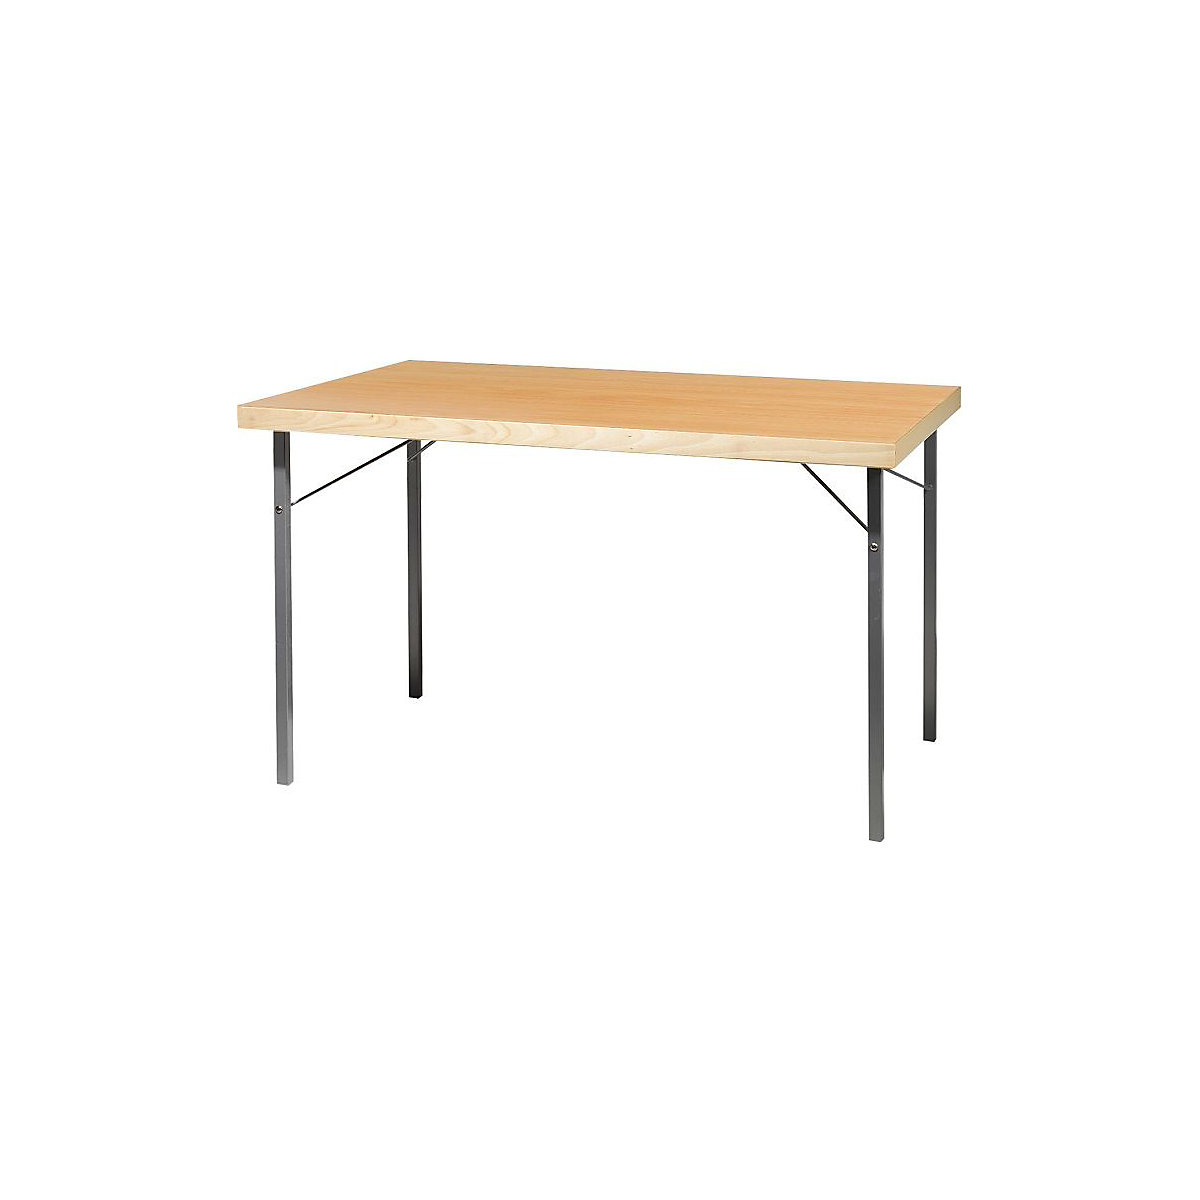 Inklapbare tafel, frame van metaal, aluminiumzilver, b x d = 1200 x 800 mm, laminaatblad-1